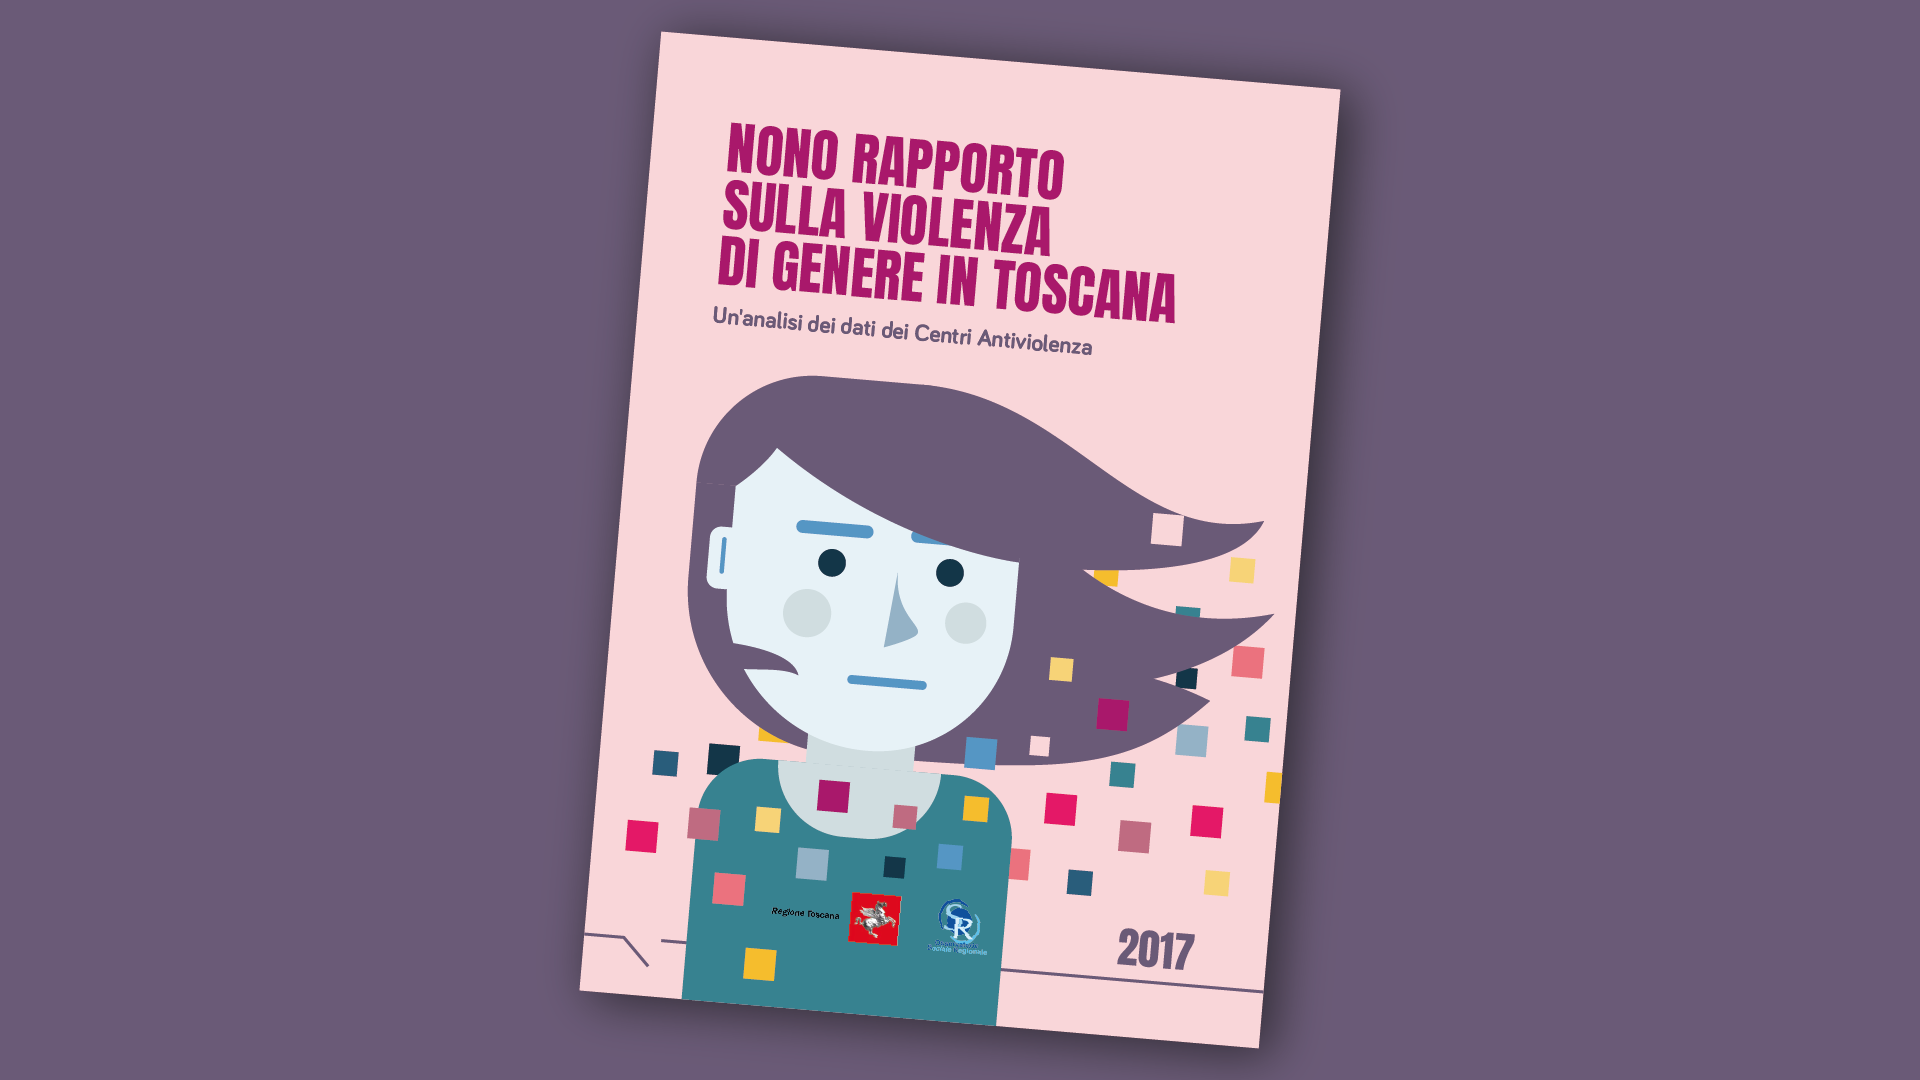 Violenza di genere in Toscana Infografica. Report ELOE Studio